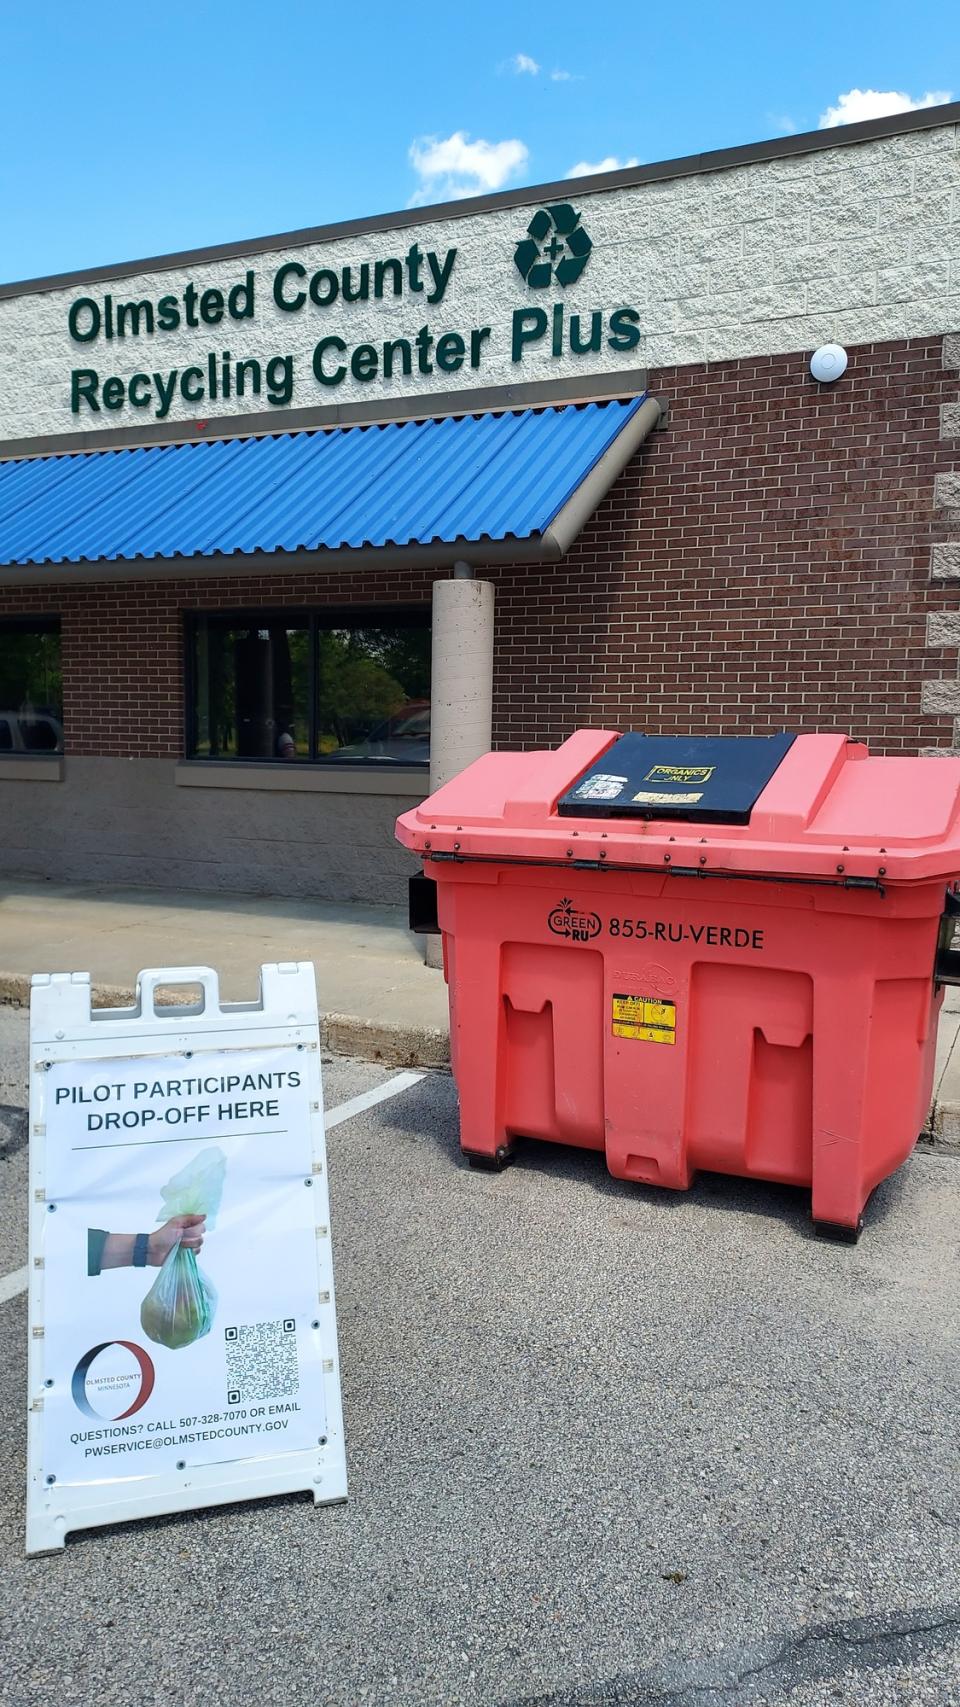 Food scrap drop-off bin in front of Recycling Center Plus